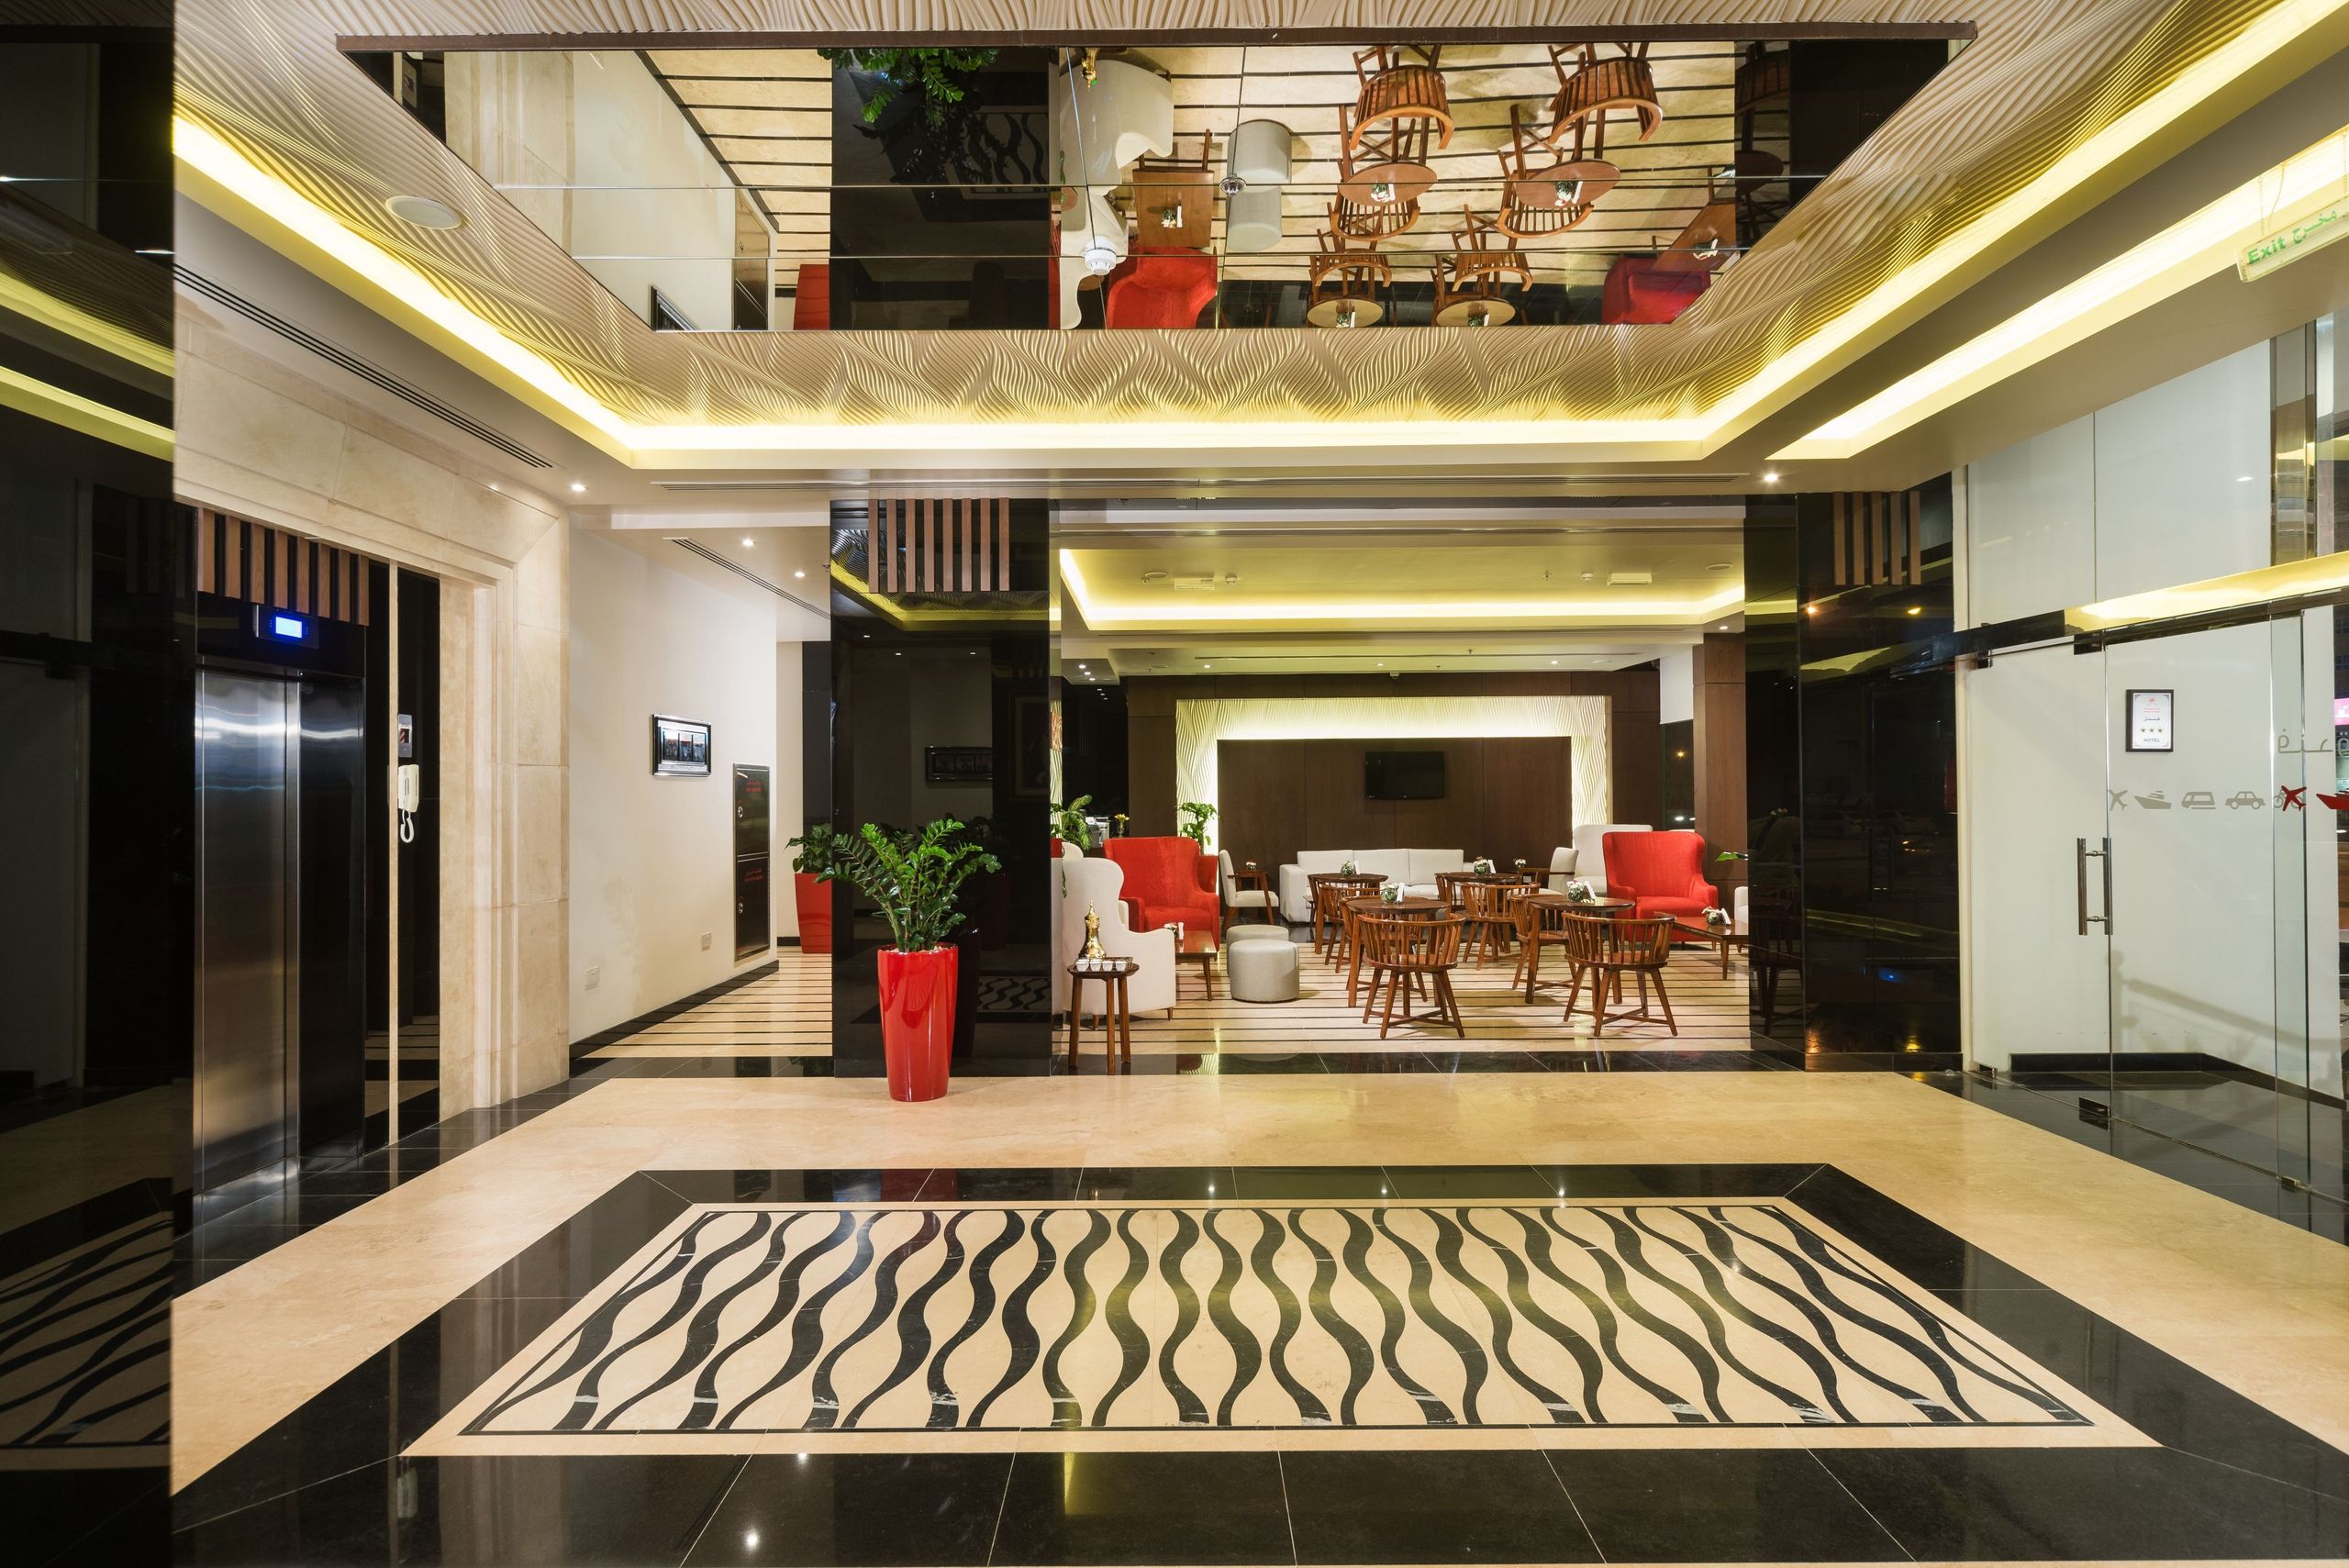 IntercityHotel Salalah - Lobby & Cafe